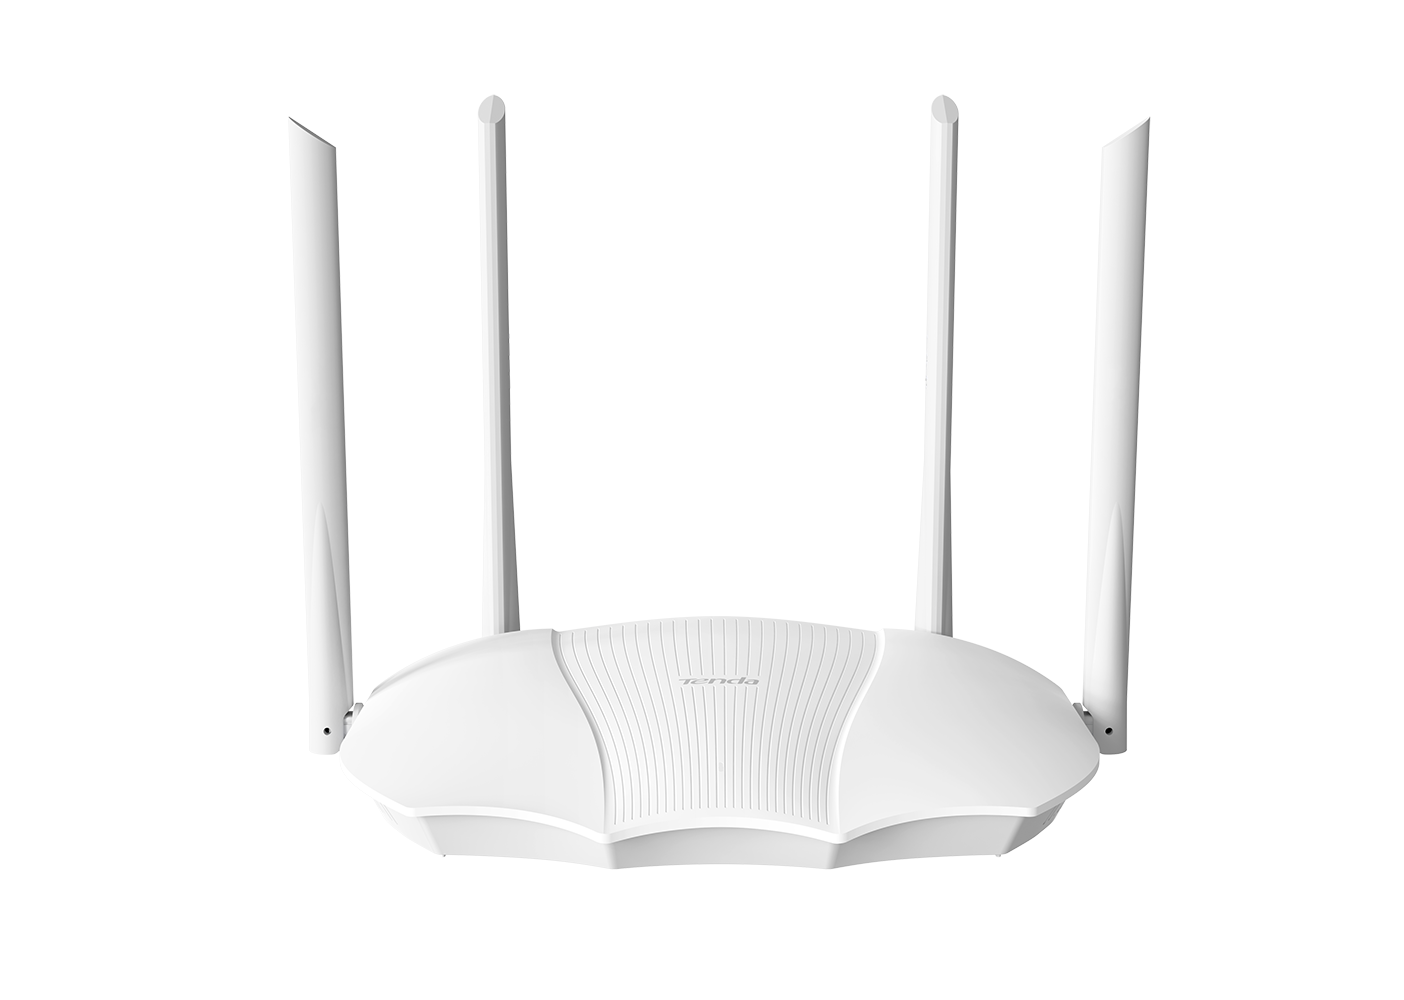 AX3000 WIFI 6 Router Gigabit Wireless Router Tenda 2.4G 5GHz